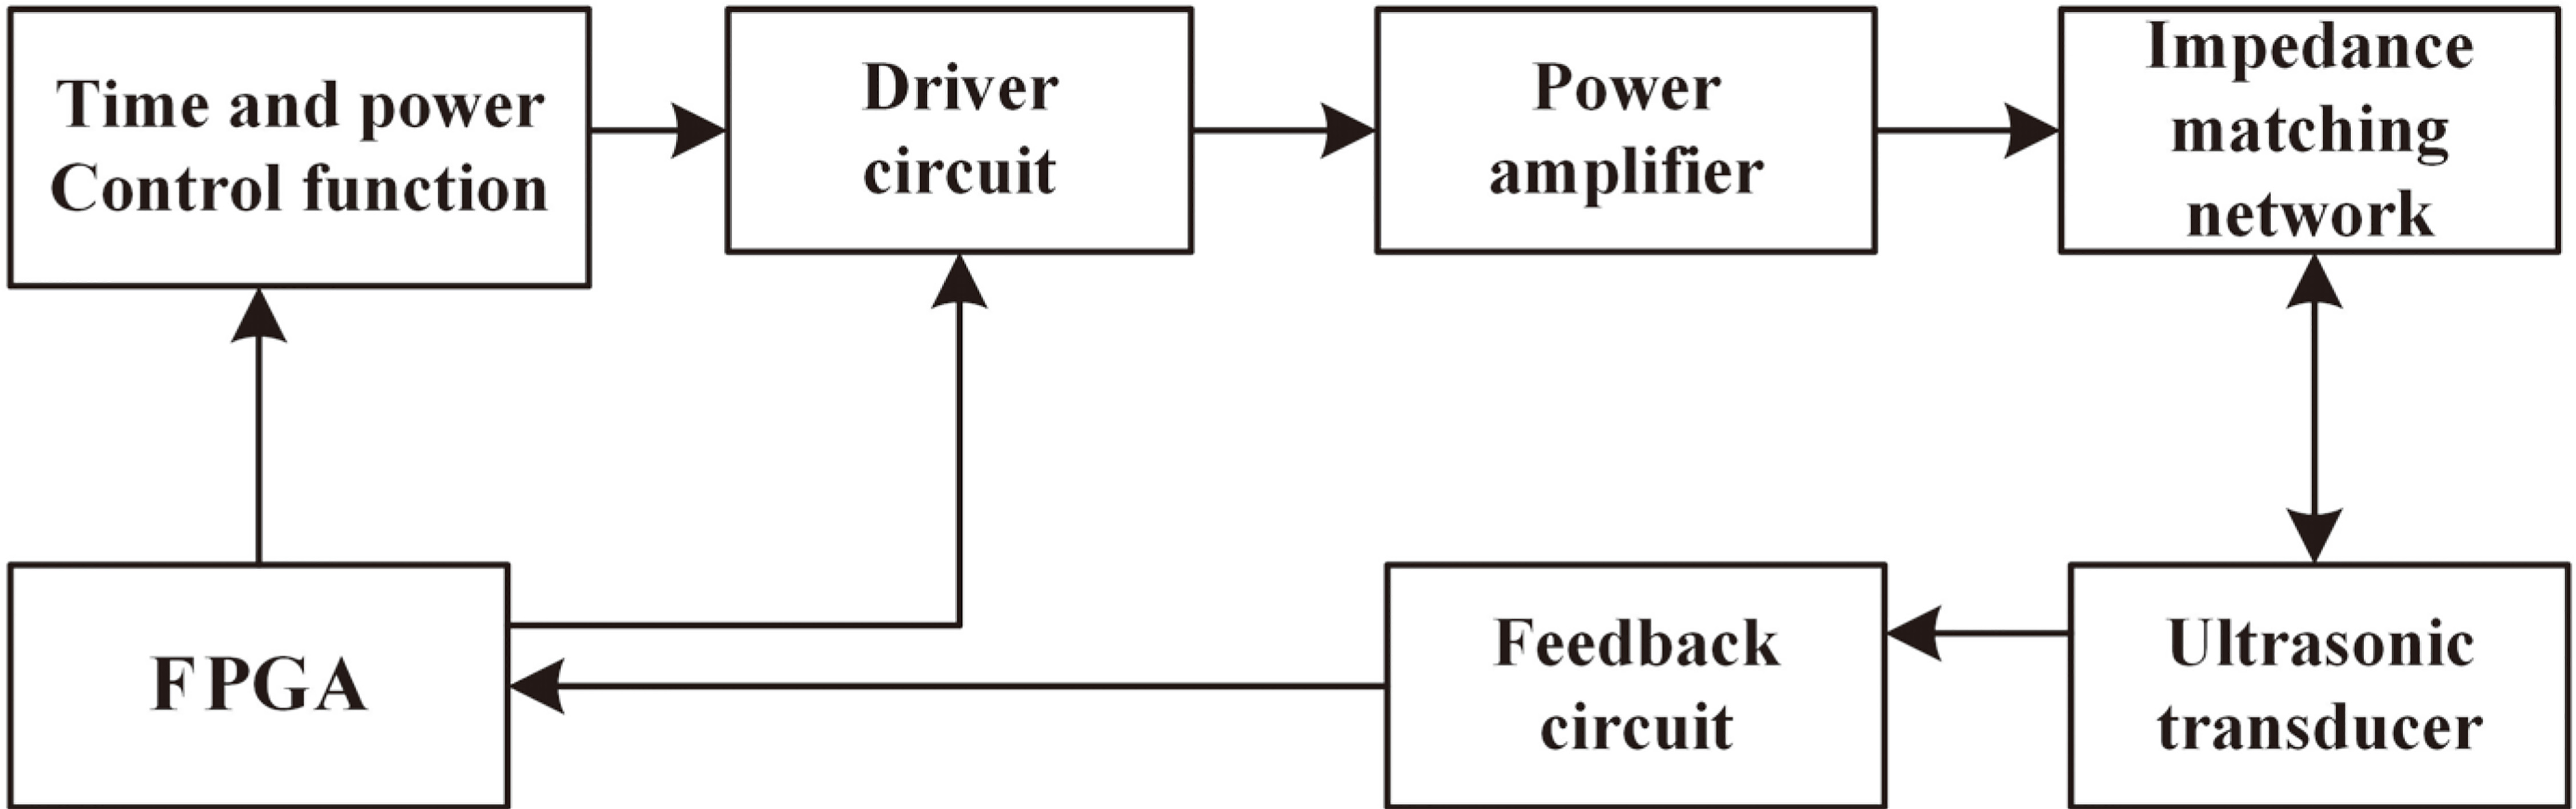 Frequency feedback control block diagram.